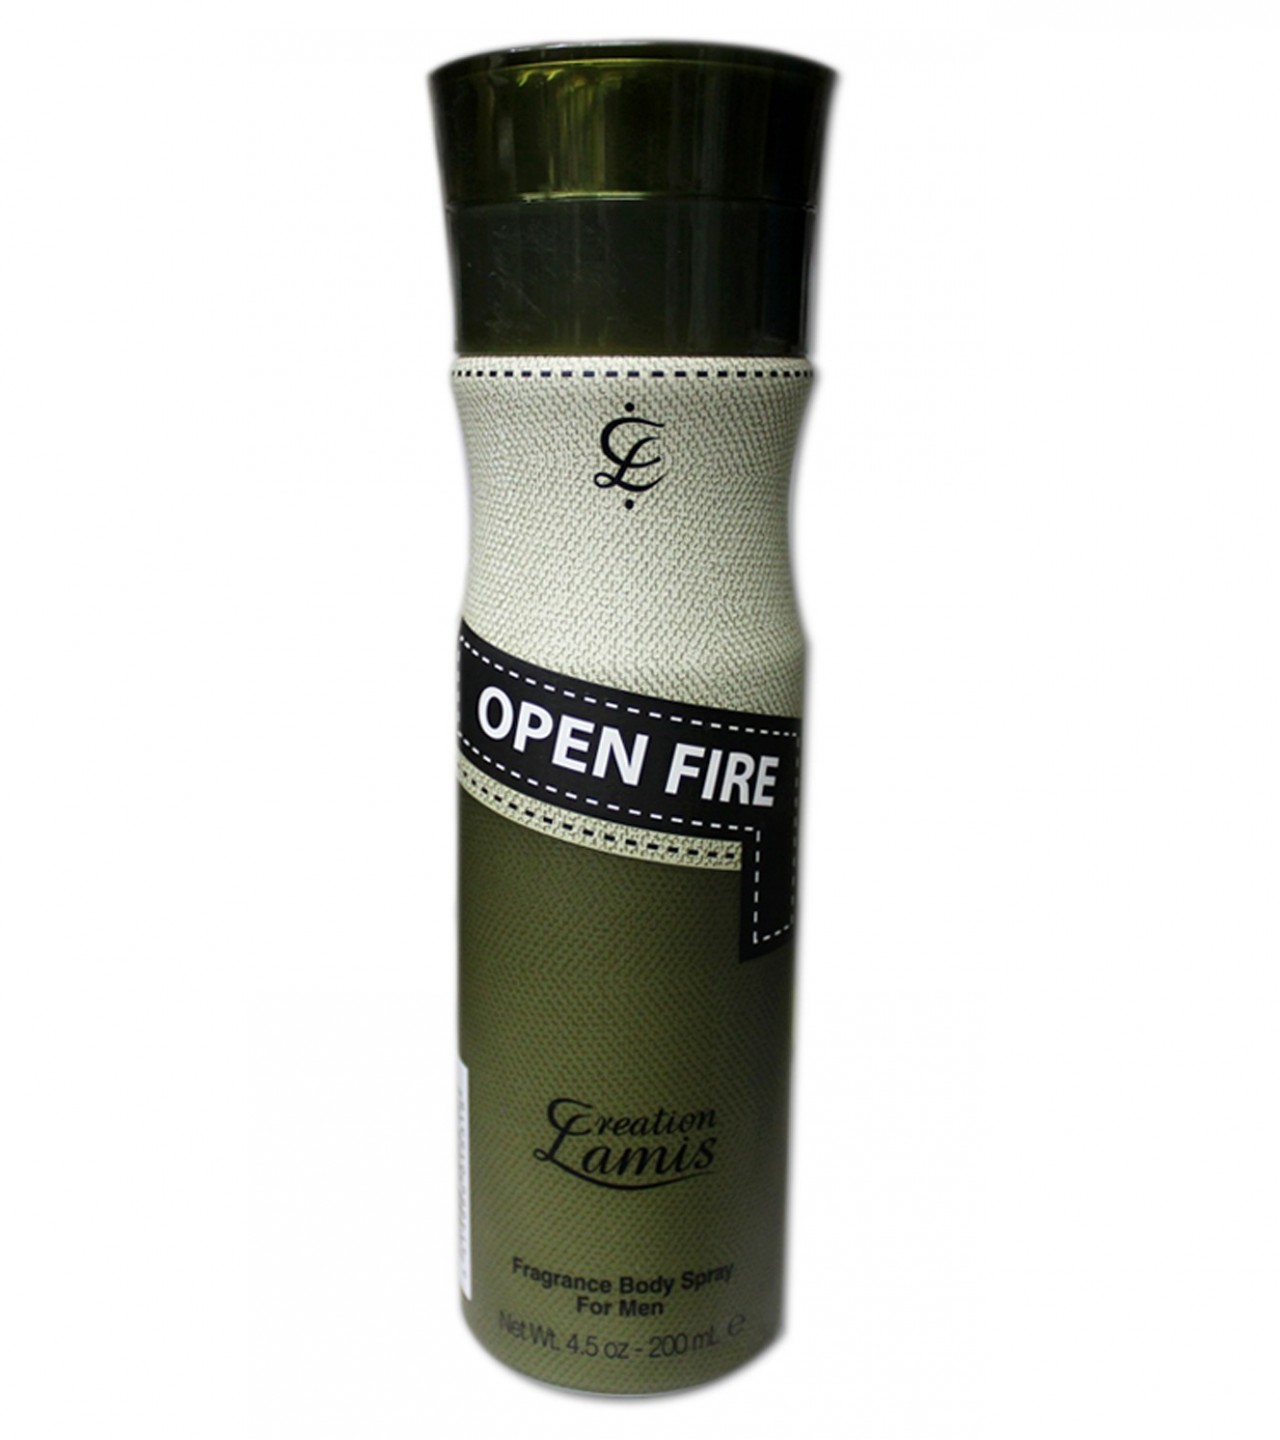 Creation Lamis Open Fire Body Spray For Men - 200 ml